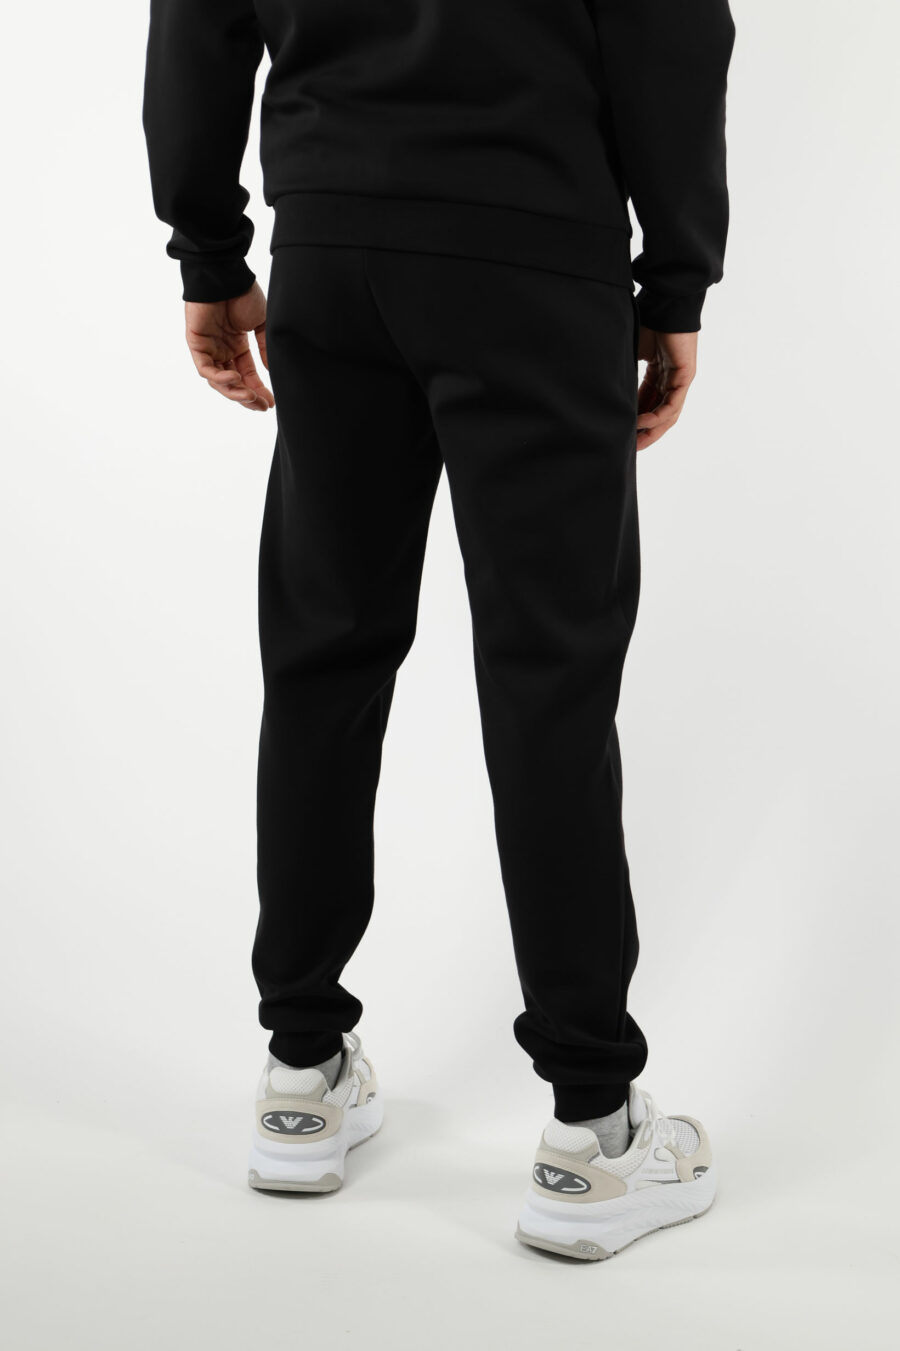 Pantalón de chándal negro con minilogo "lux identity" blanco en placa negra - 110944